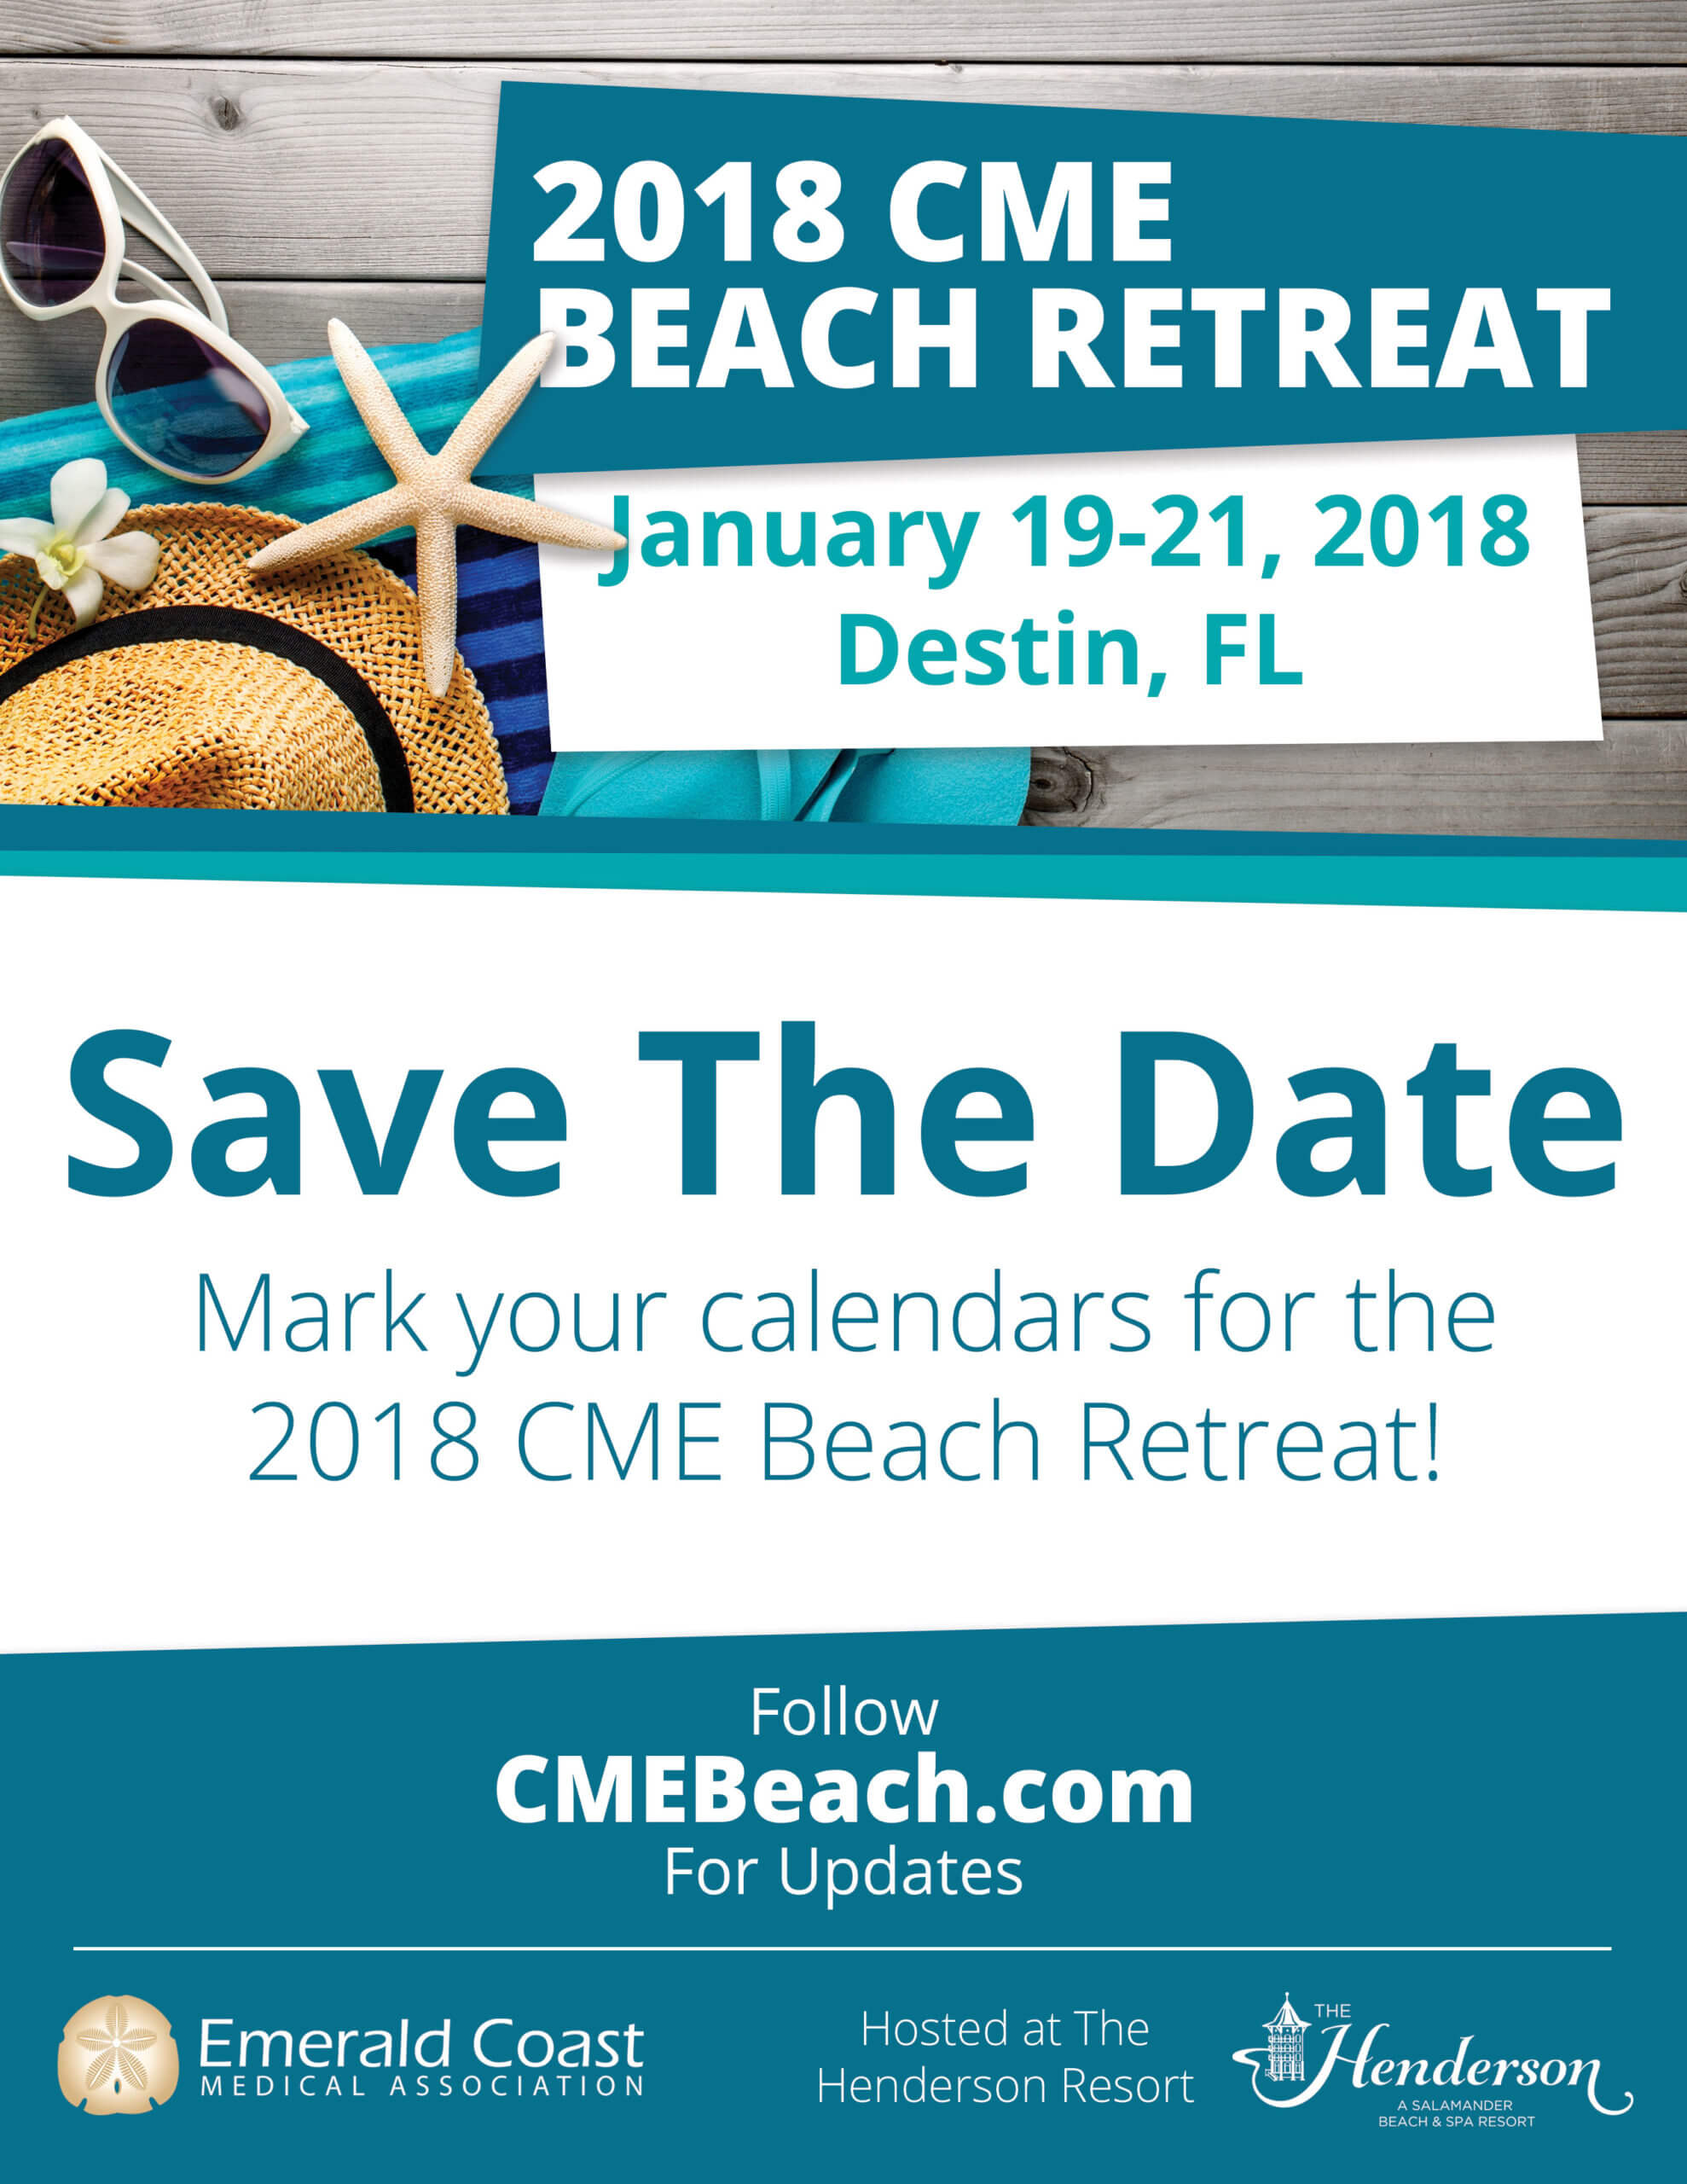 2018 CME Beach Retreat image